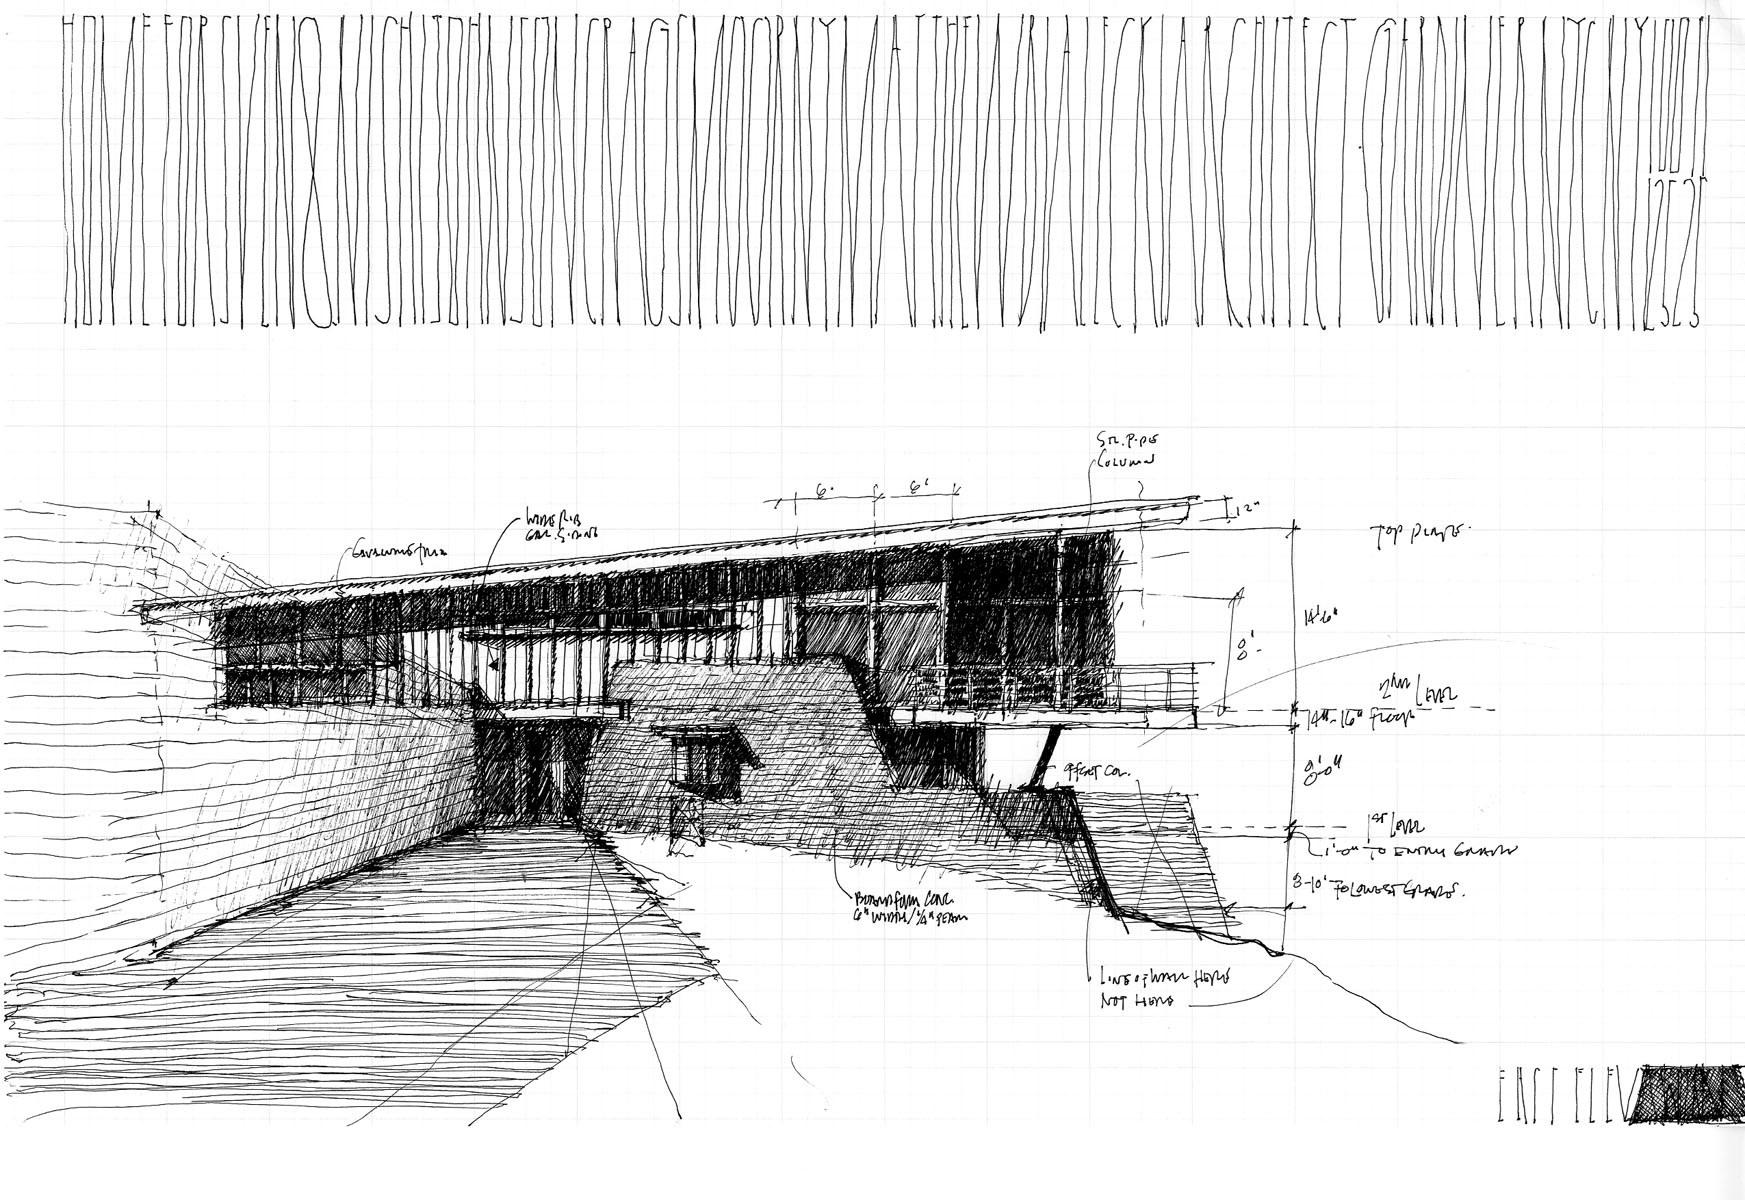 Entry Elevation Sketch